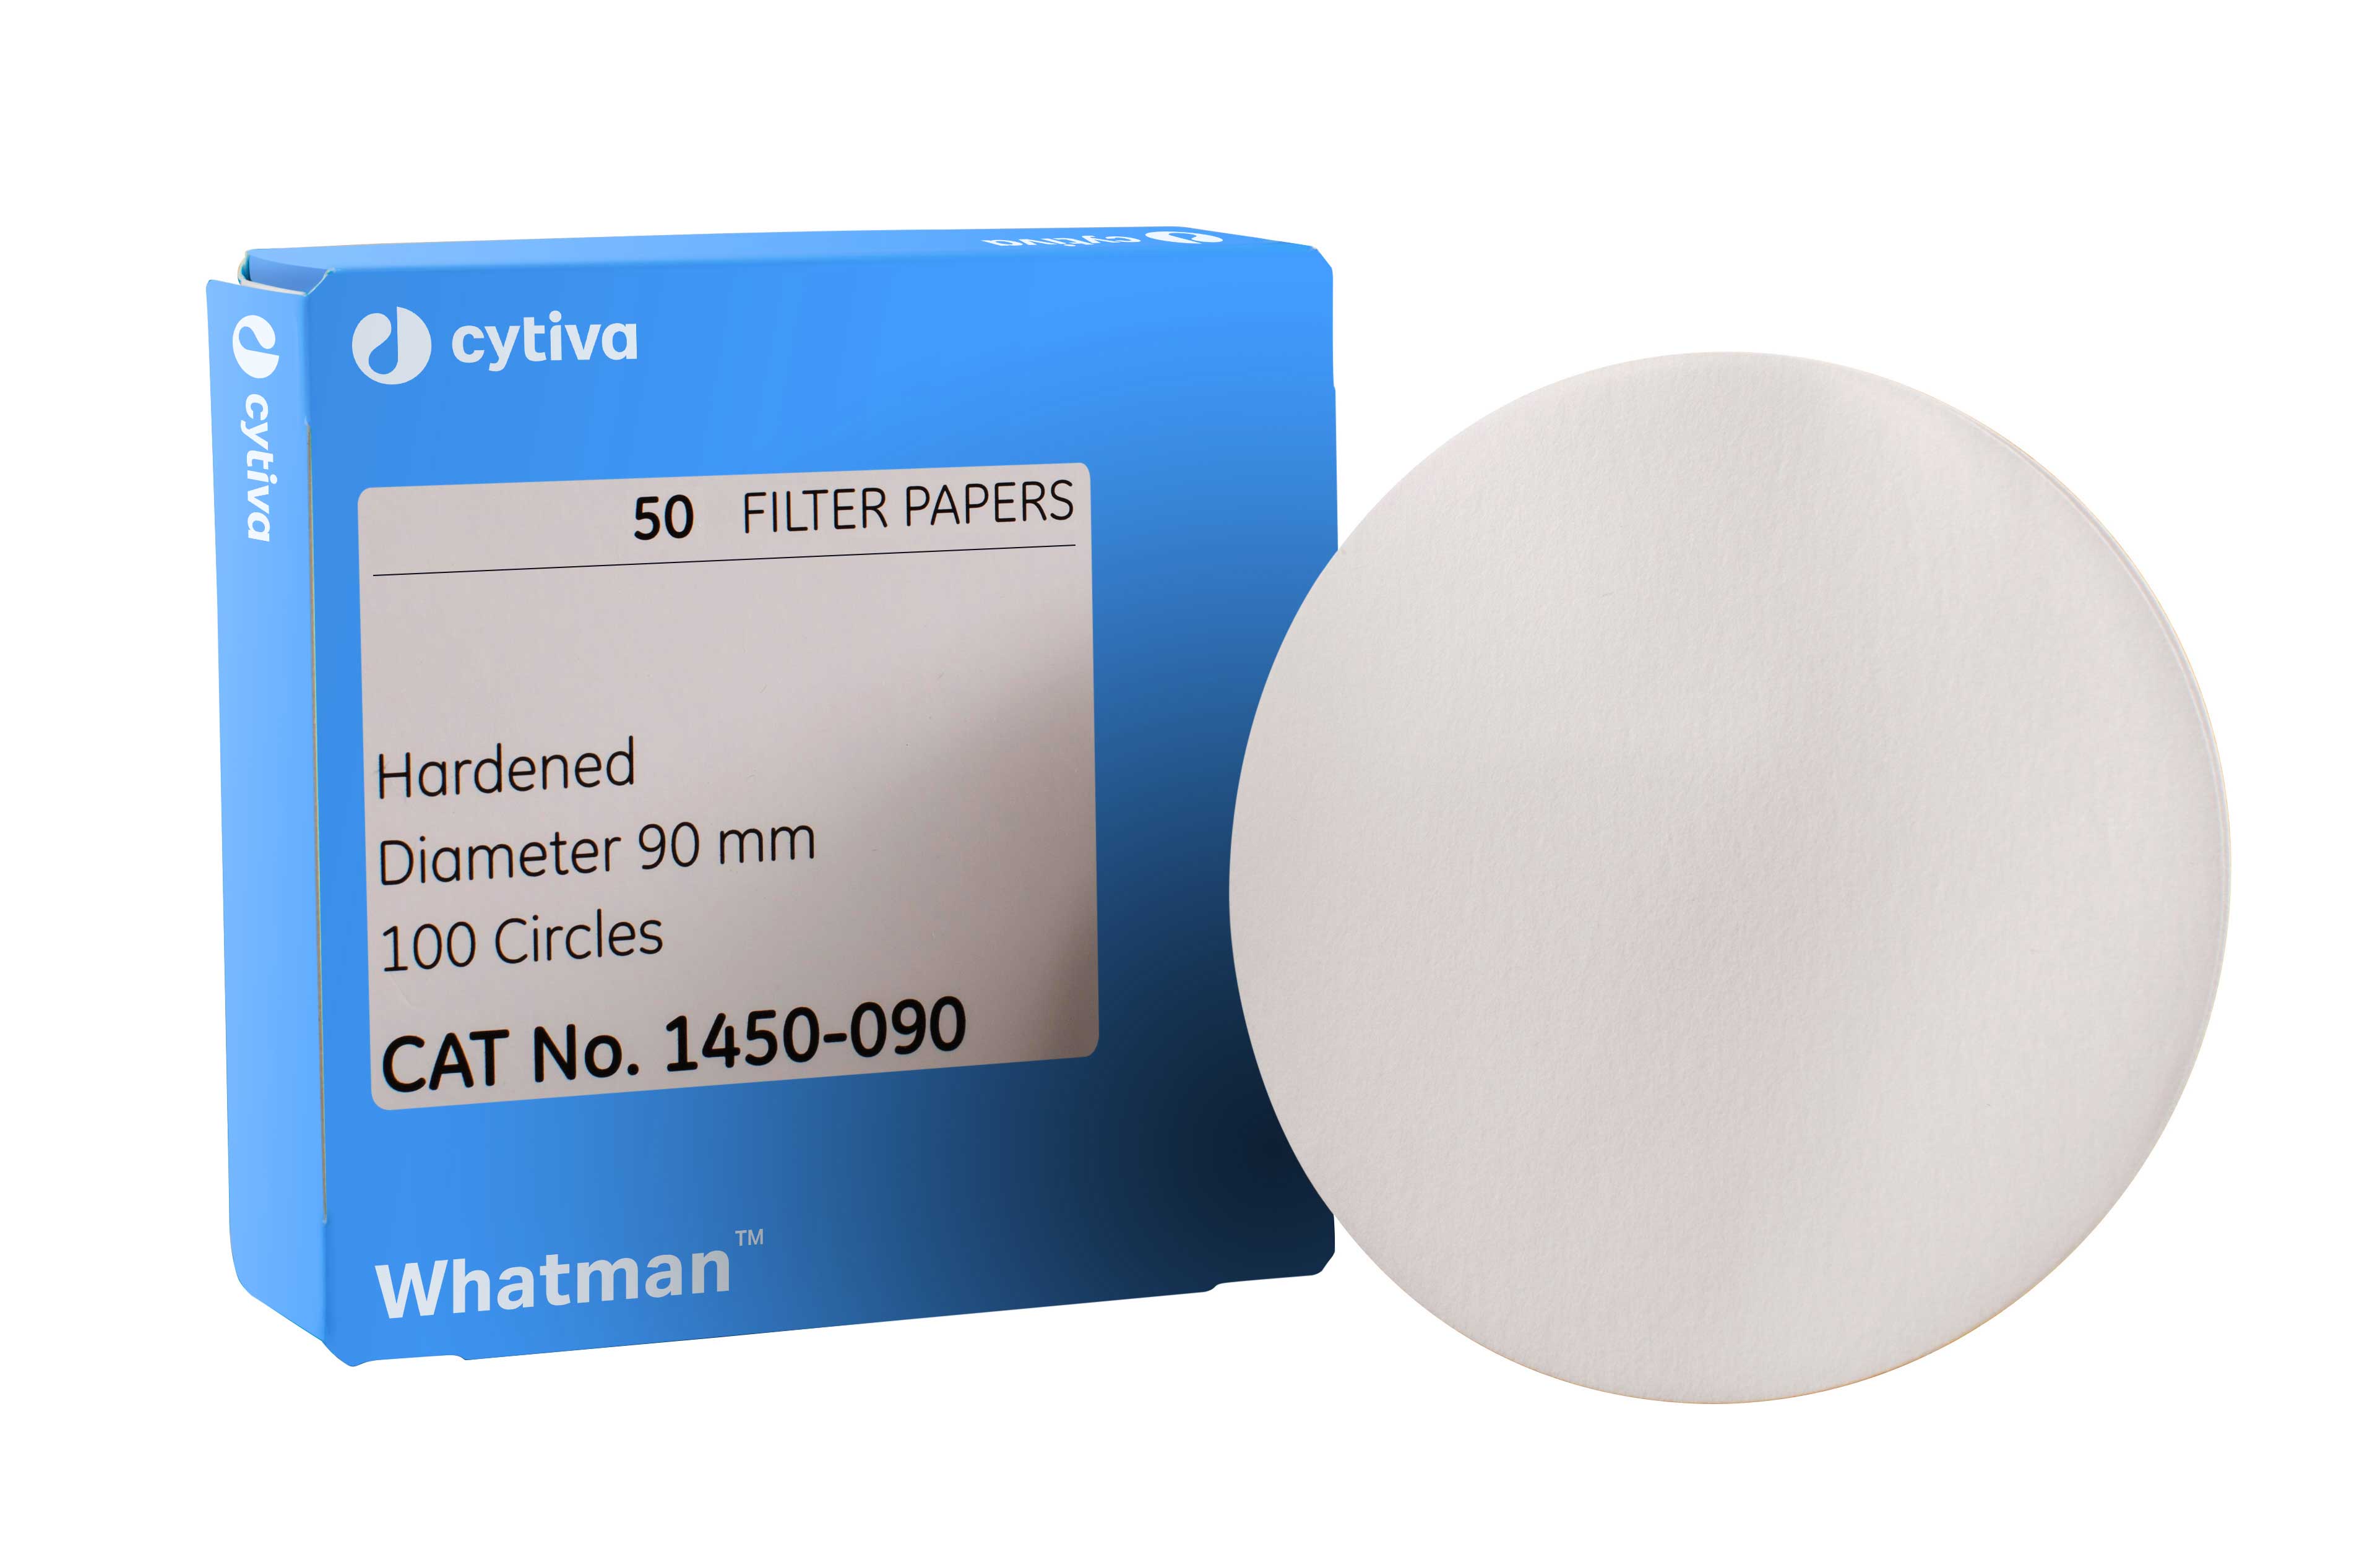 Filtro de papel de celulosa pura. Whatman™ (Cytiva). Disco Grado 50 Celulosa pura sin cenizas. Ø (mm): 125. Retención típica (µm): 2,7